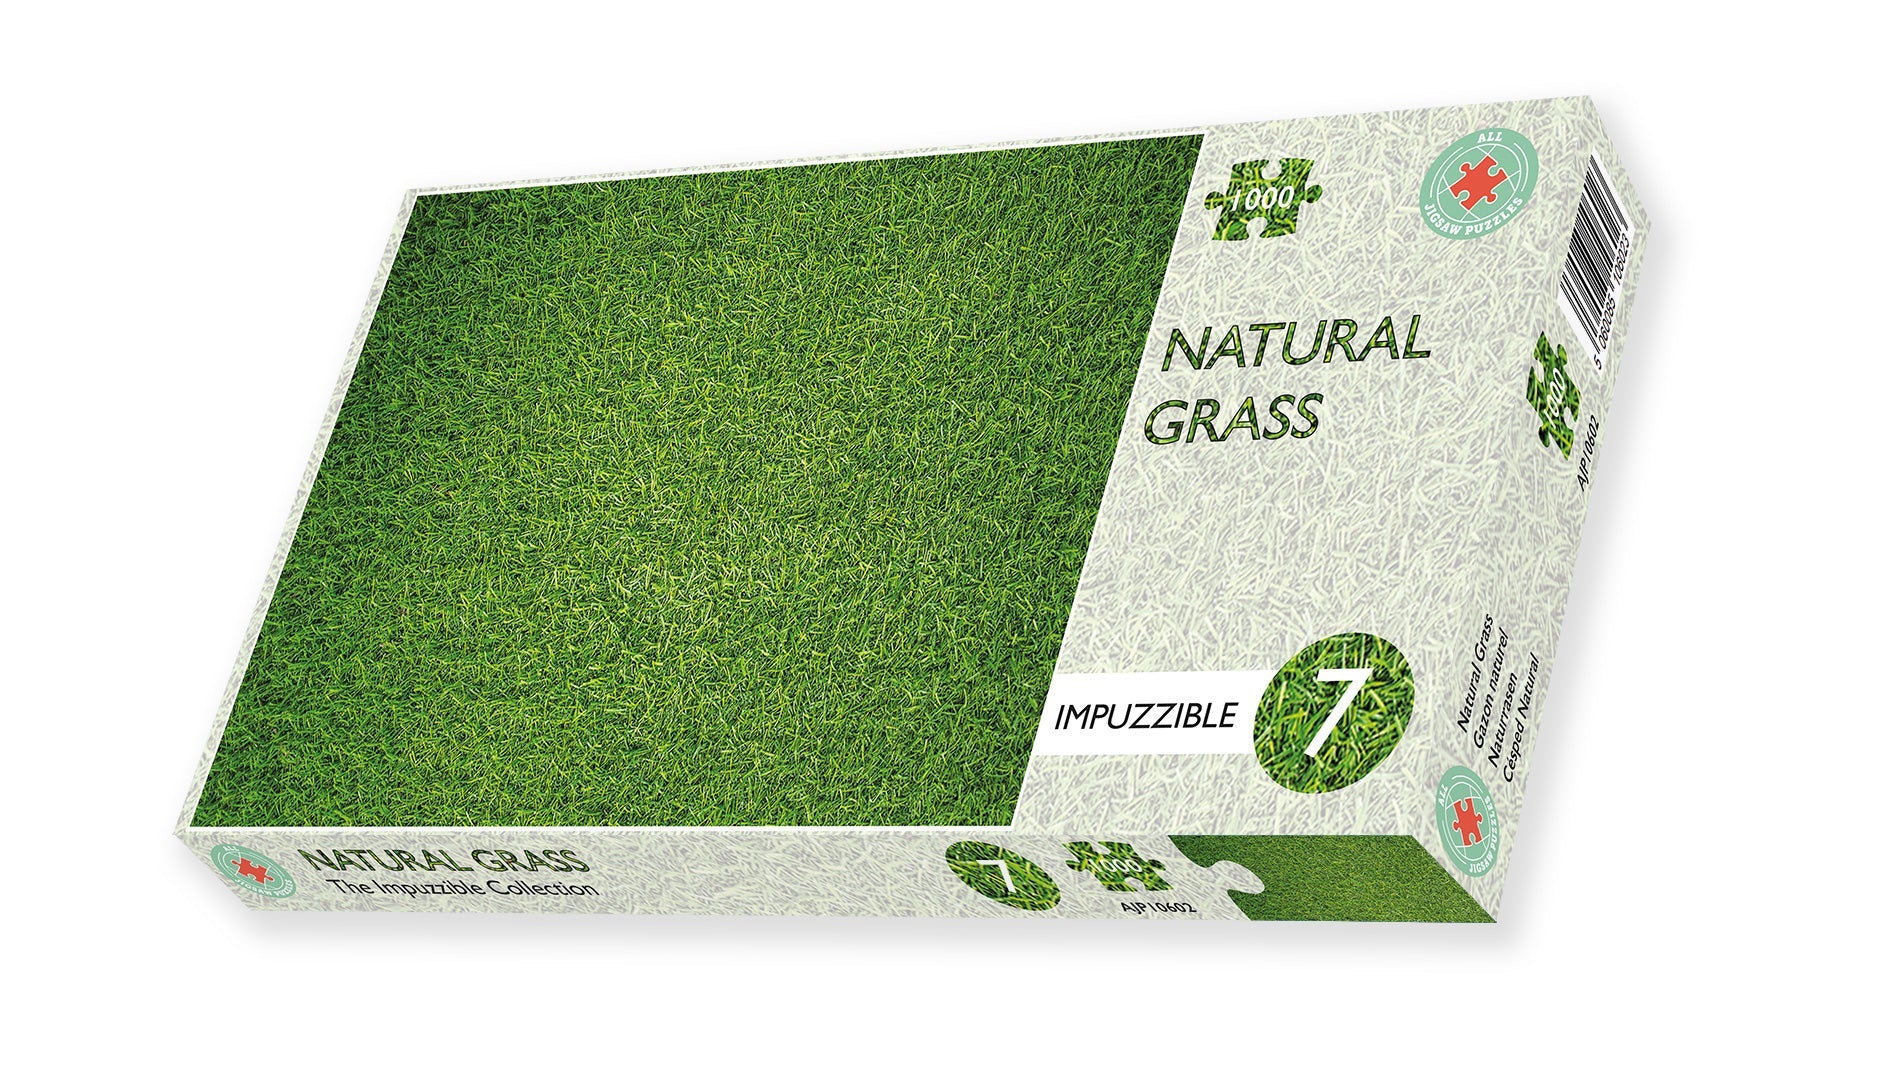 Natural Grass - Impuzzible No.7 - 1000 Piece Jigsaw Puzzle box